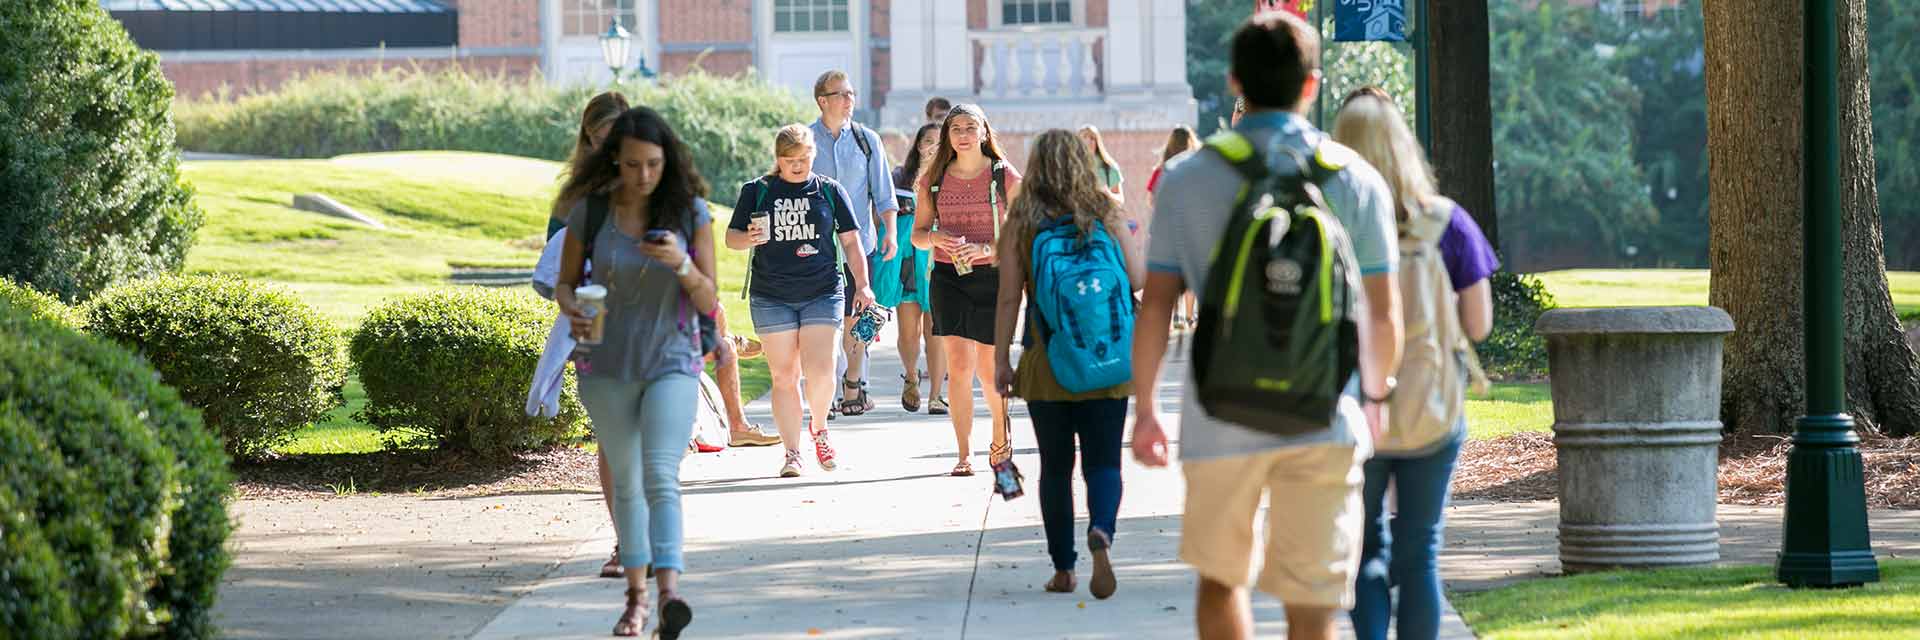 students walking on campus header